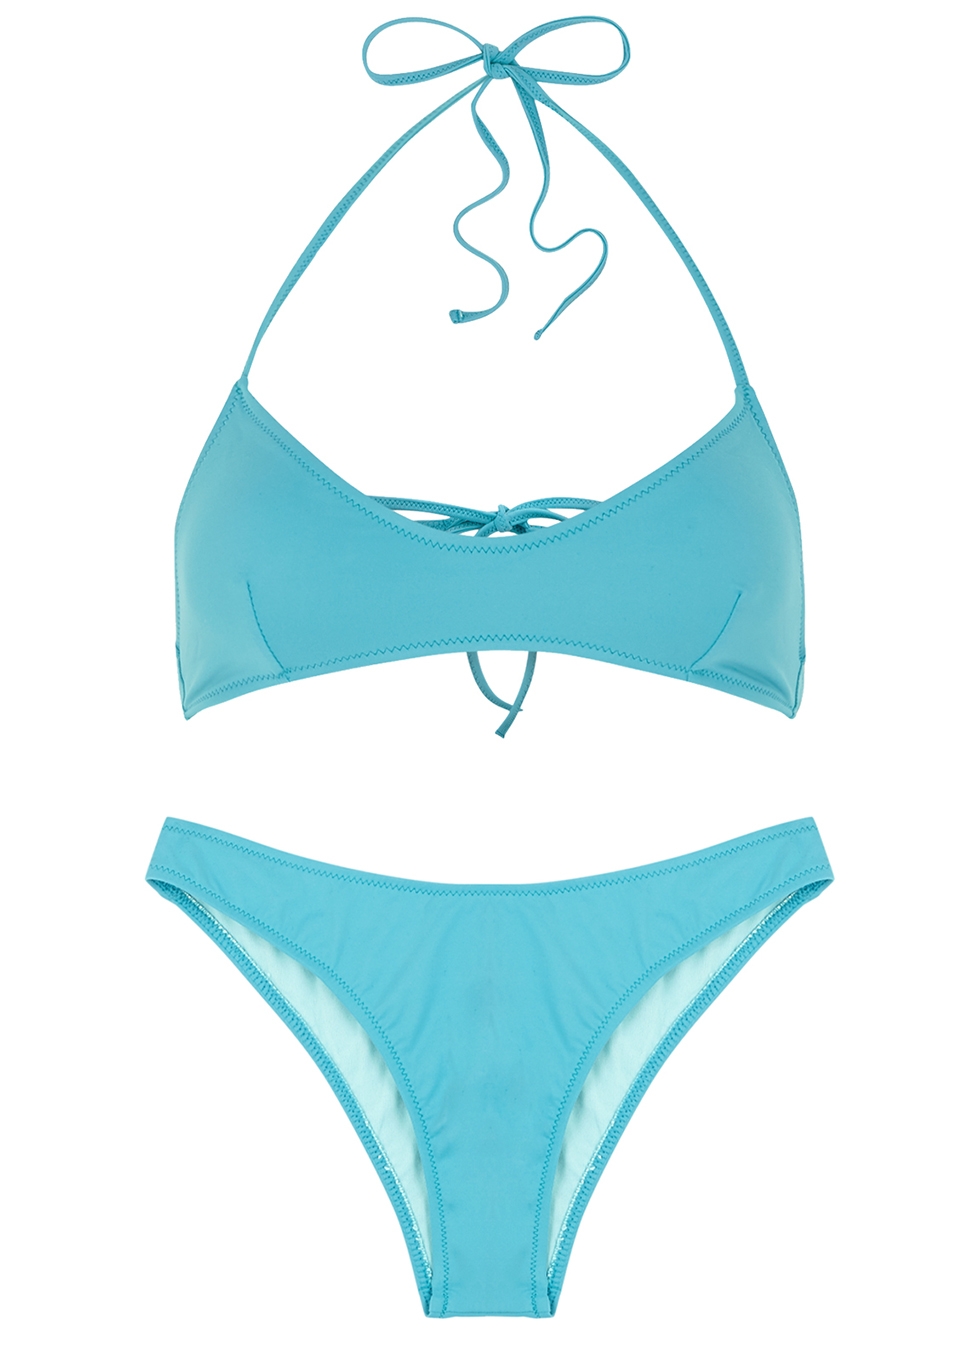 Gimaguas Aiguablava Turquoise Bikini | ModeSens